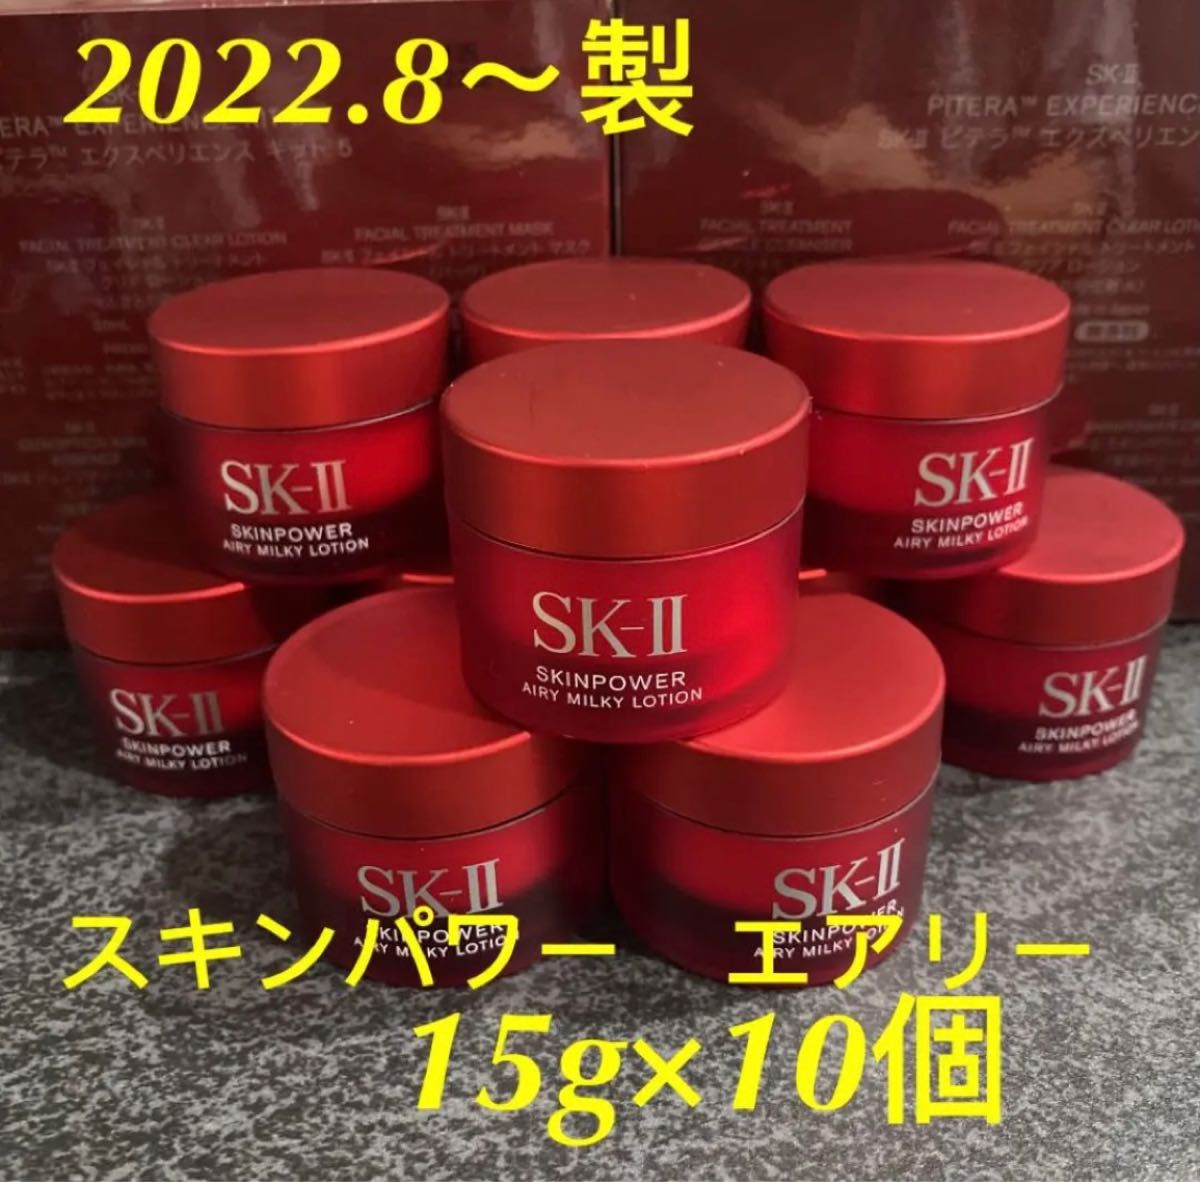 SK-2 SK-IIスキンパワー エアリー(美容乳液)15g ×10個=150g | labiela.com